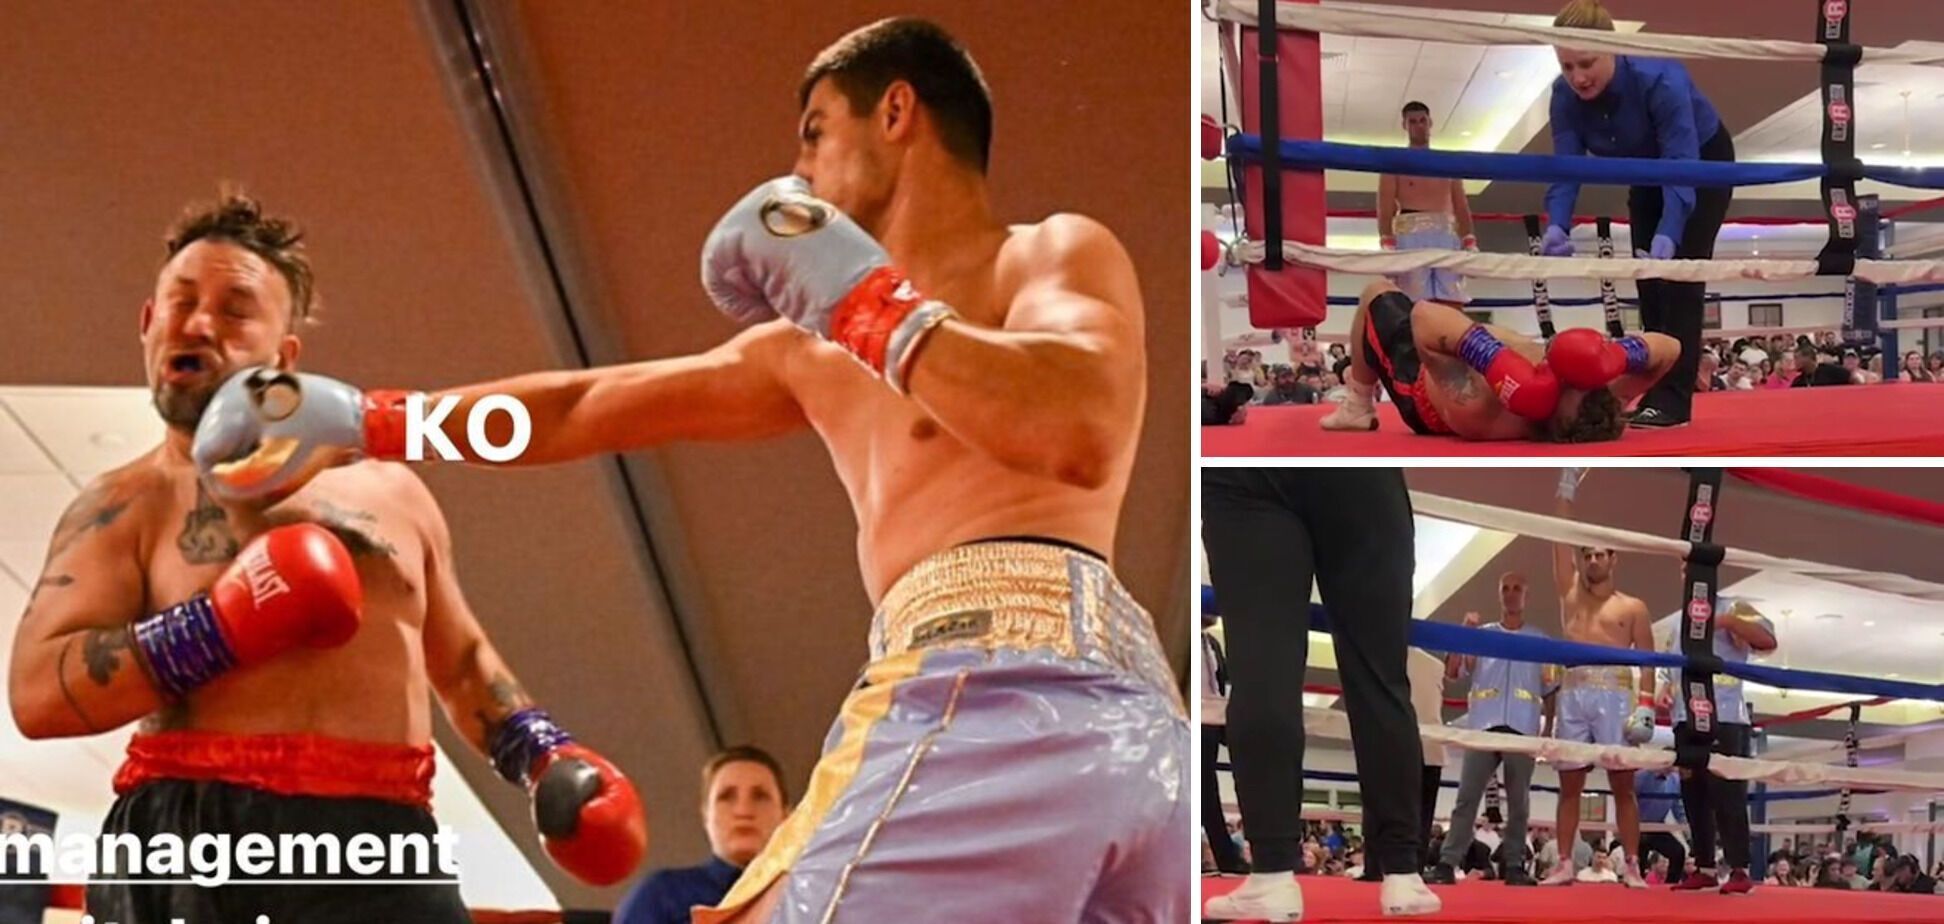 The unbeaten Ukrainian heavyweight won a rare standing knockout in the 2nd round